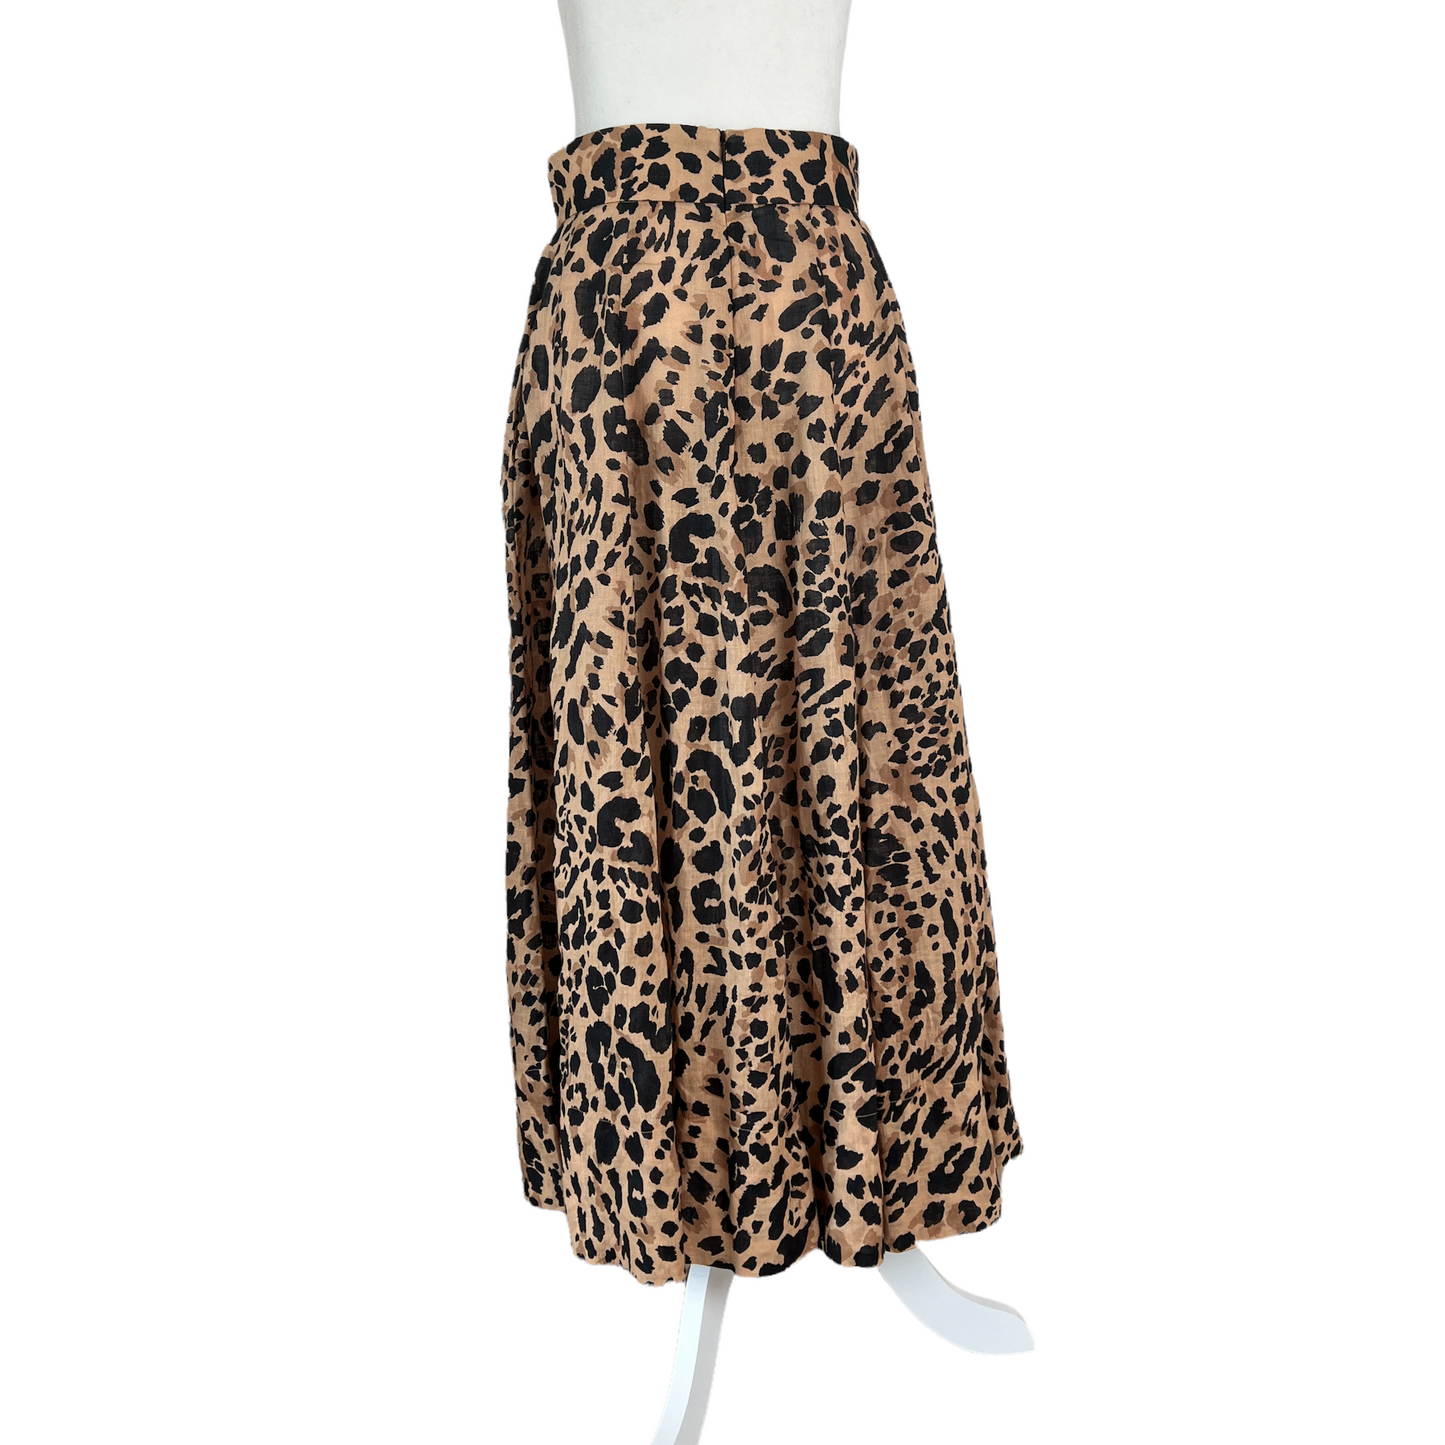 Leopard Print Skirt - 2